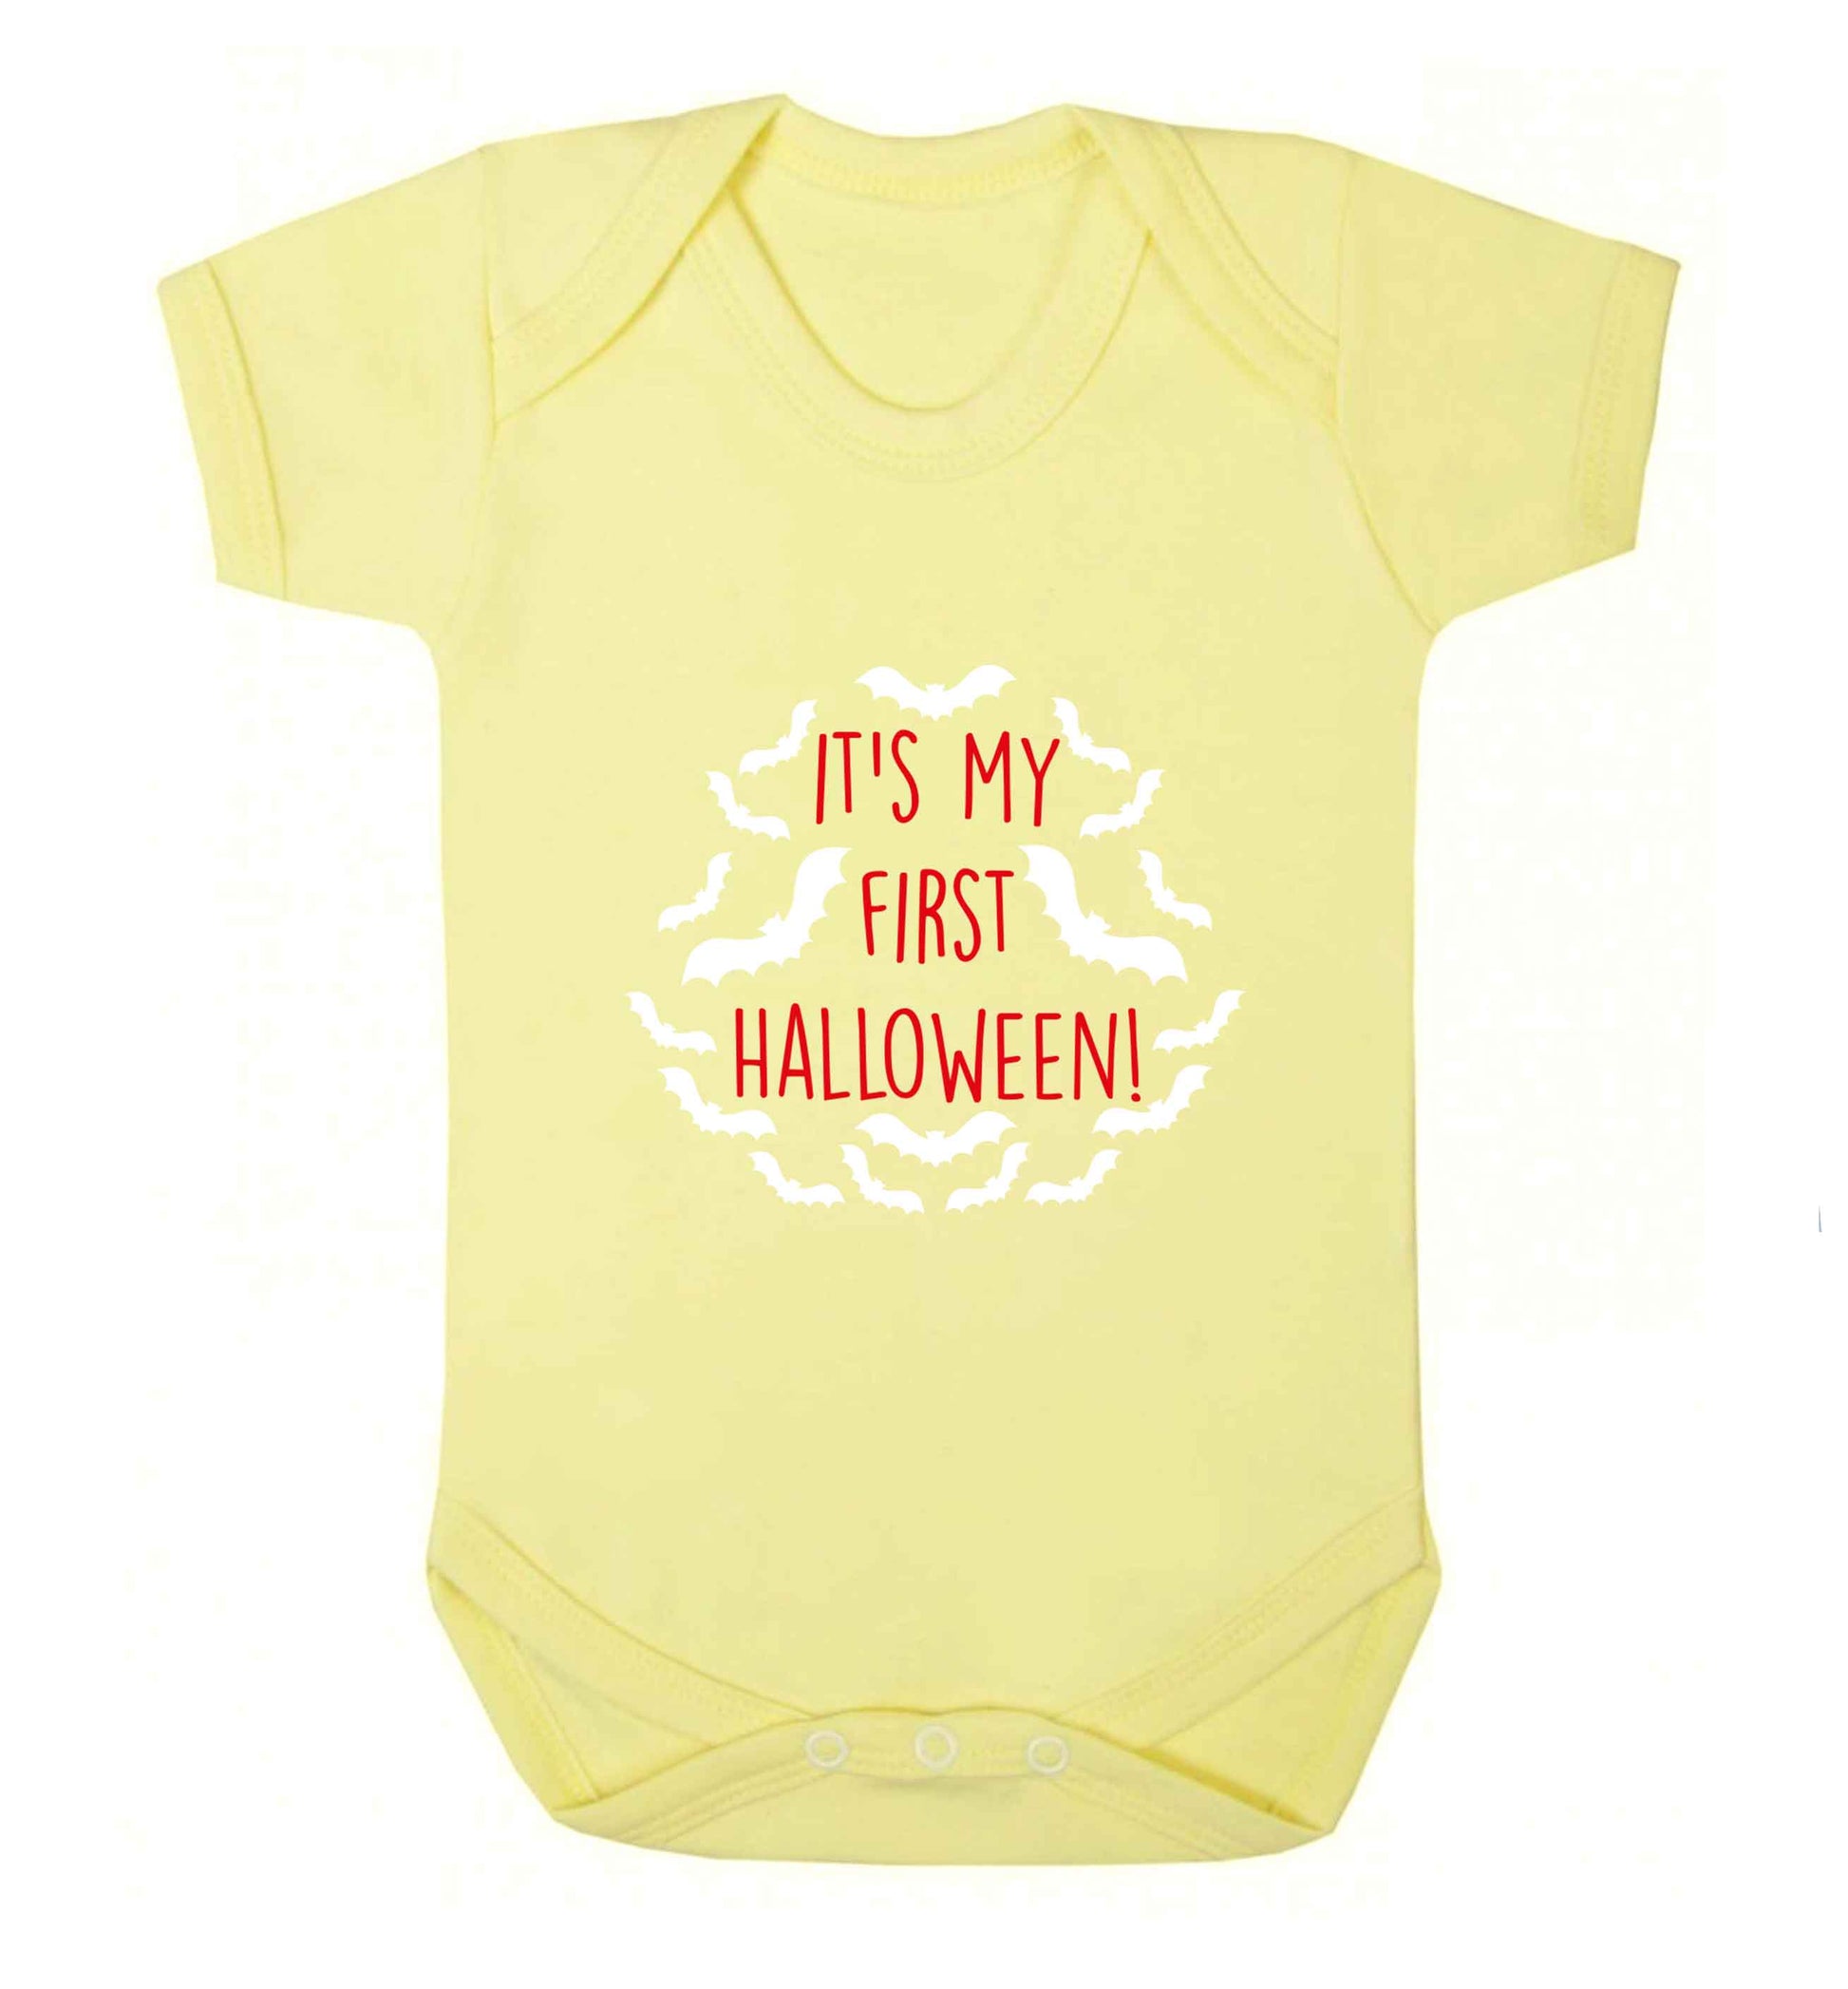 It's my first halloween - bat border baby vest pale yellow 18-24 months